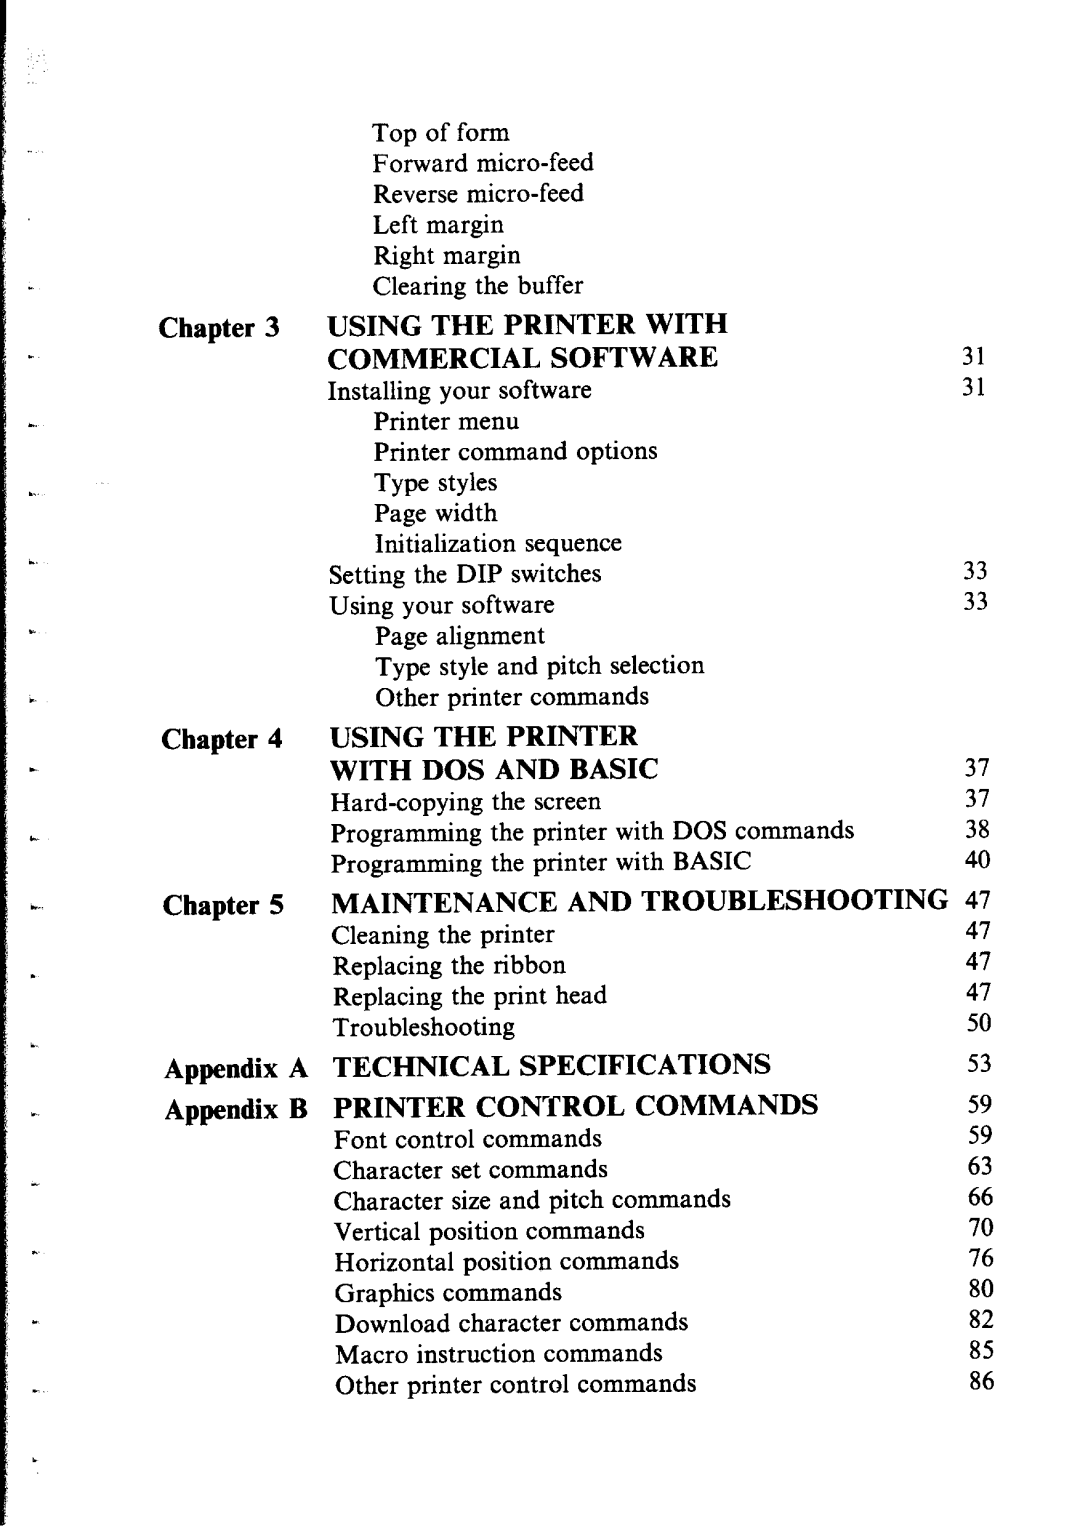 Star Micronics NX-1000 manual Using The Printer With Commercial Software, Using The Printer With Dos And Basic 